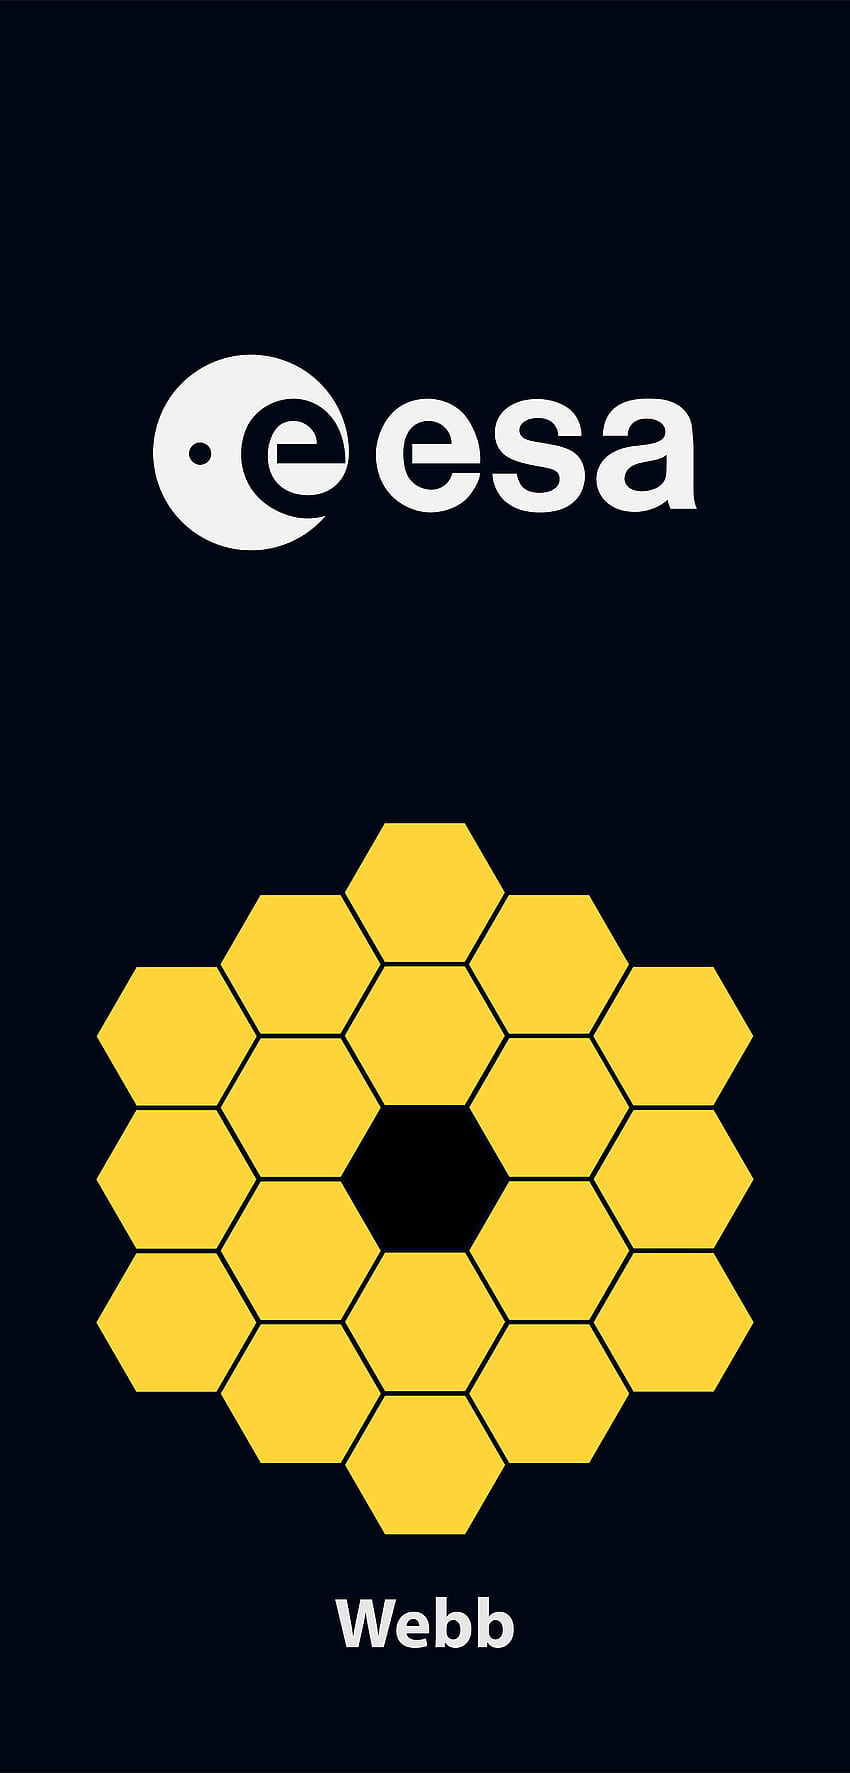 ESA WEBB, Space, Ariane, Telescope, James, NASA, Europe, Exploration HD phone wallpaper